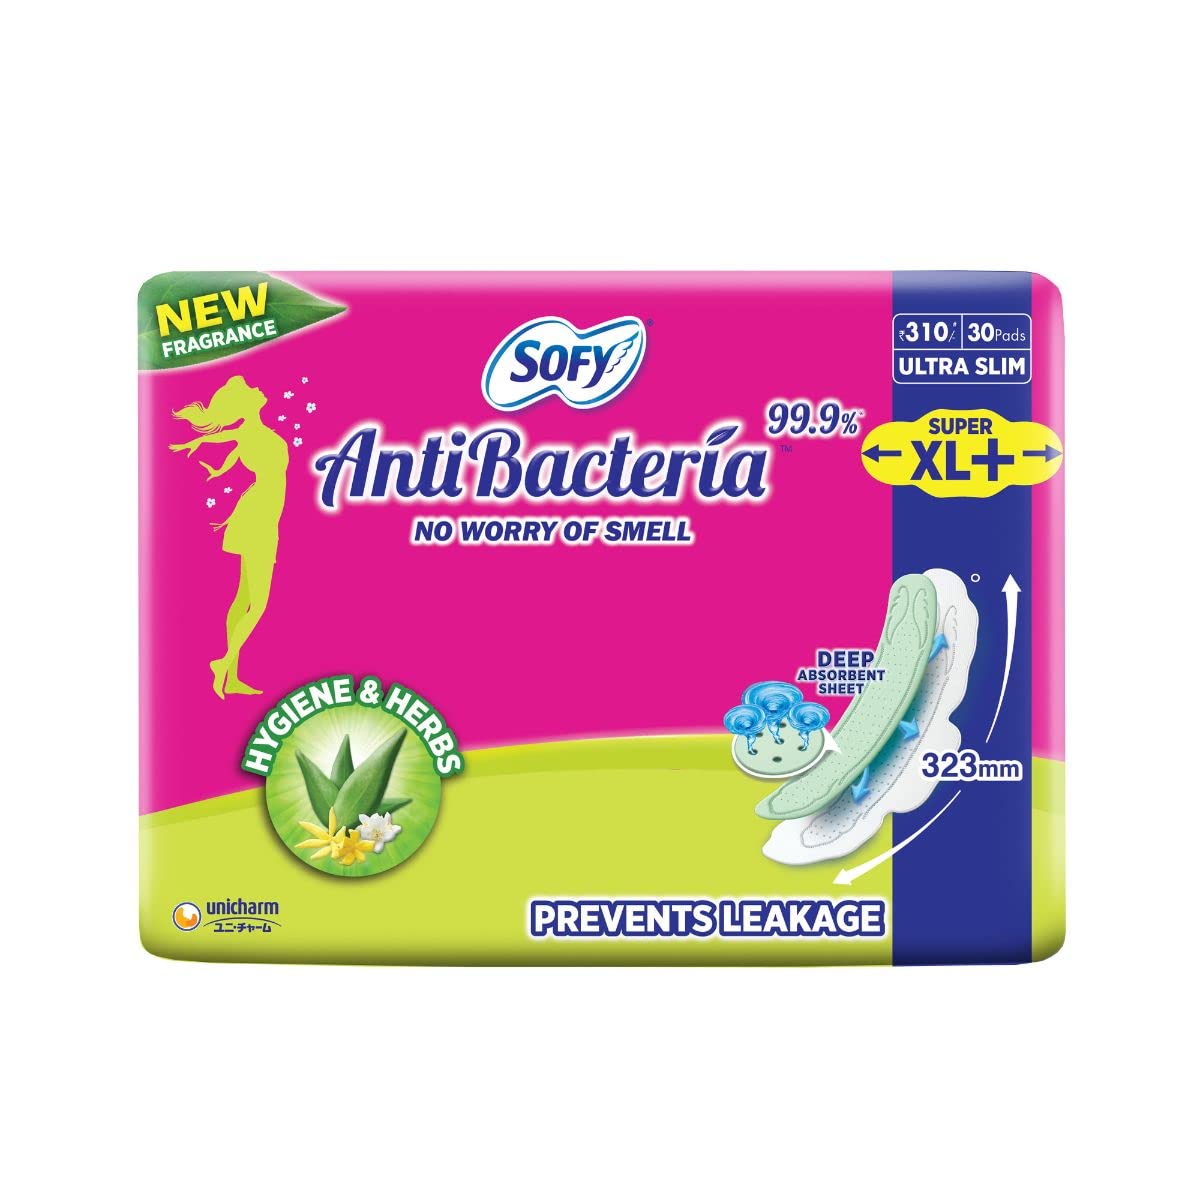 Sofy Antibacteria Sanitary Pads (Super XL Plus) - Pack of 30 Pieces